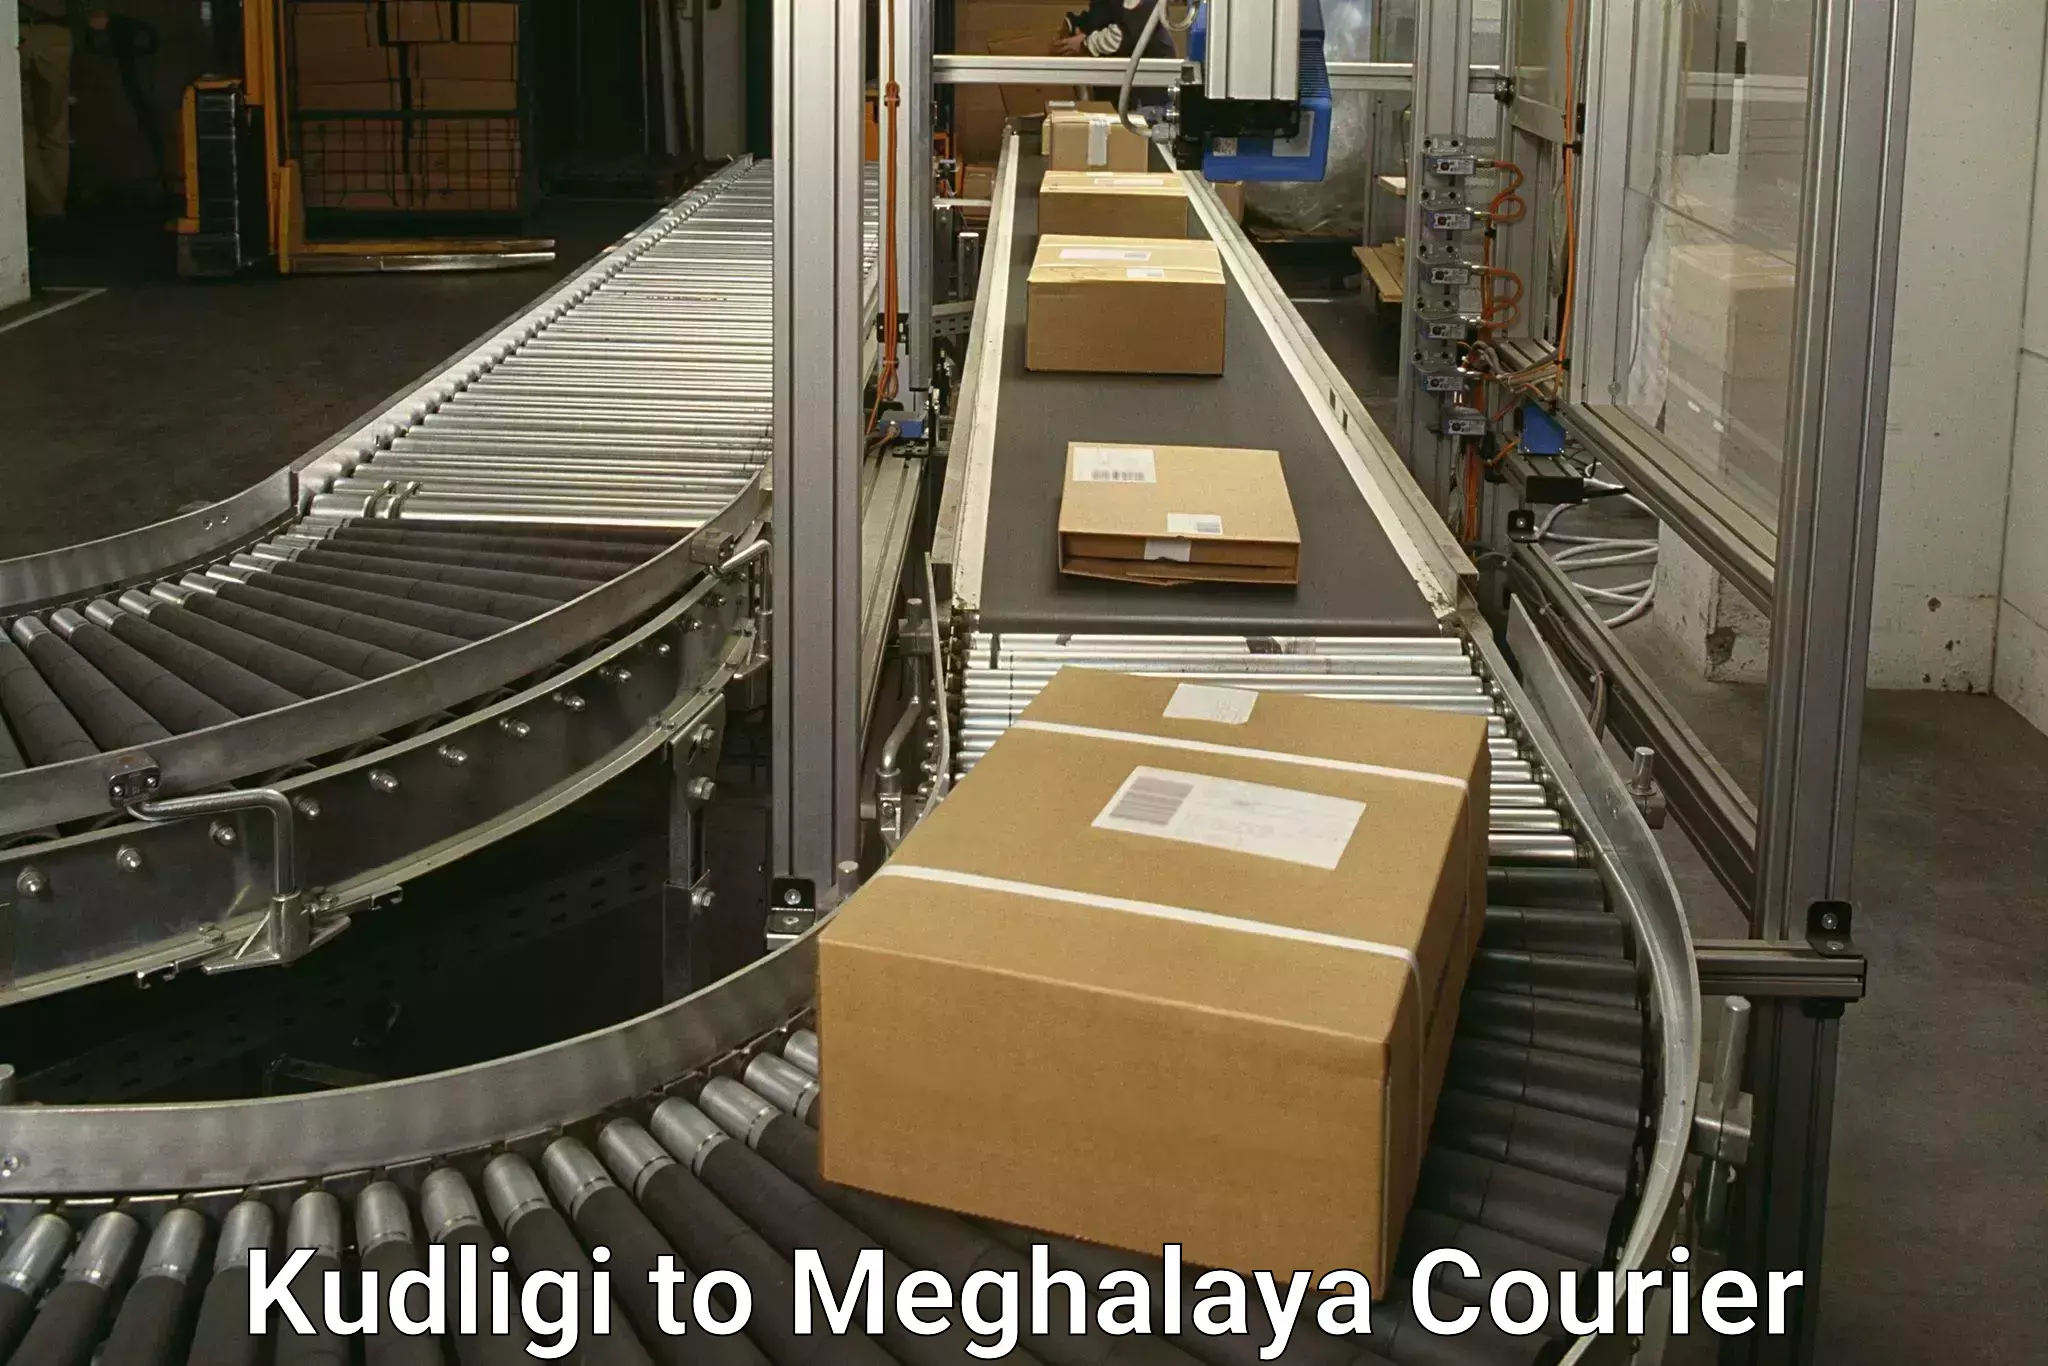 State-of-the-art courier technology Kudligi to Meghalaya